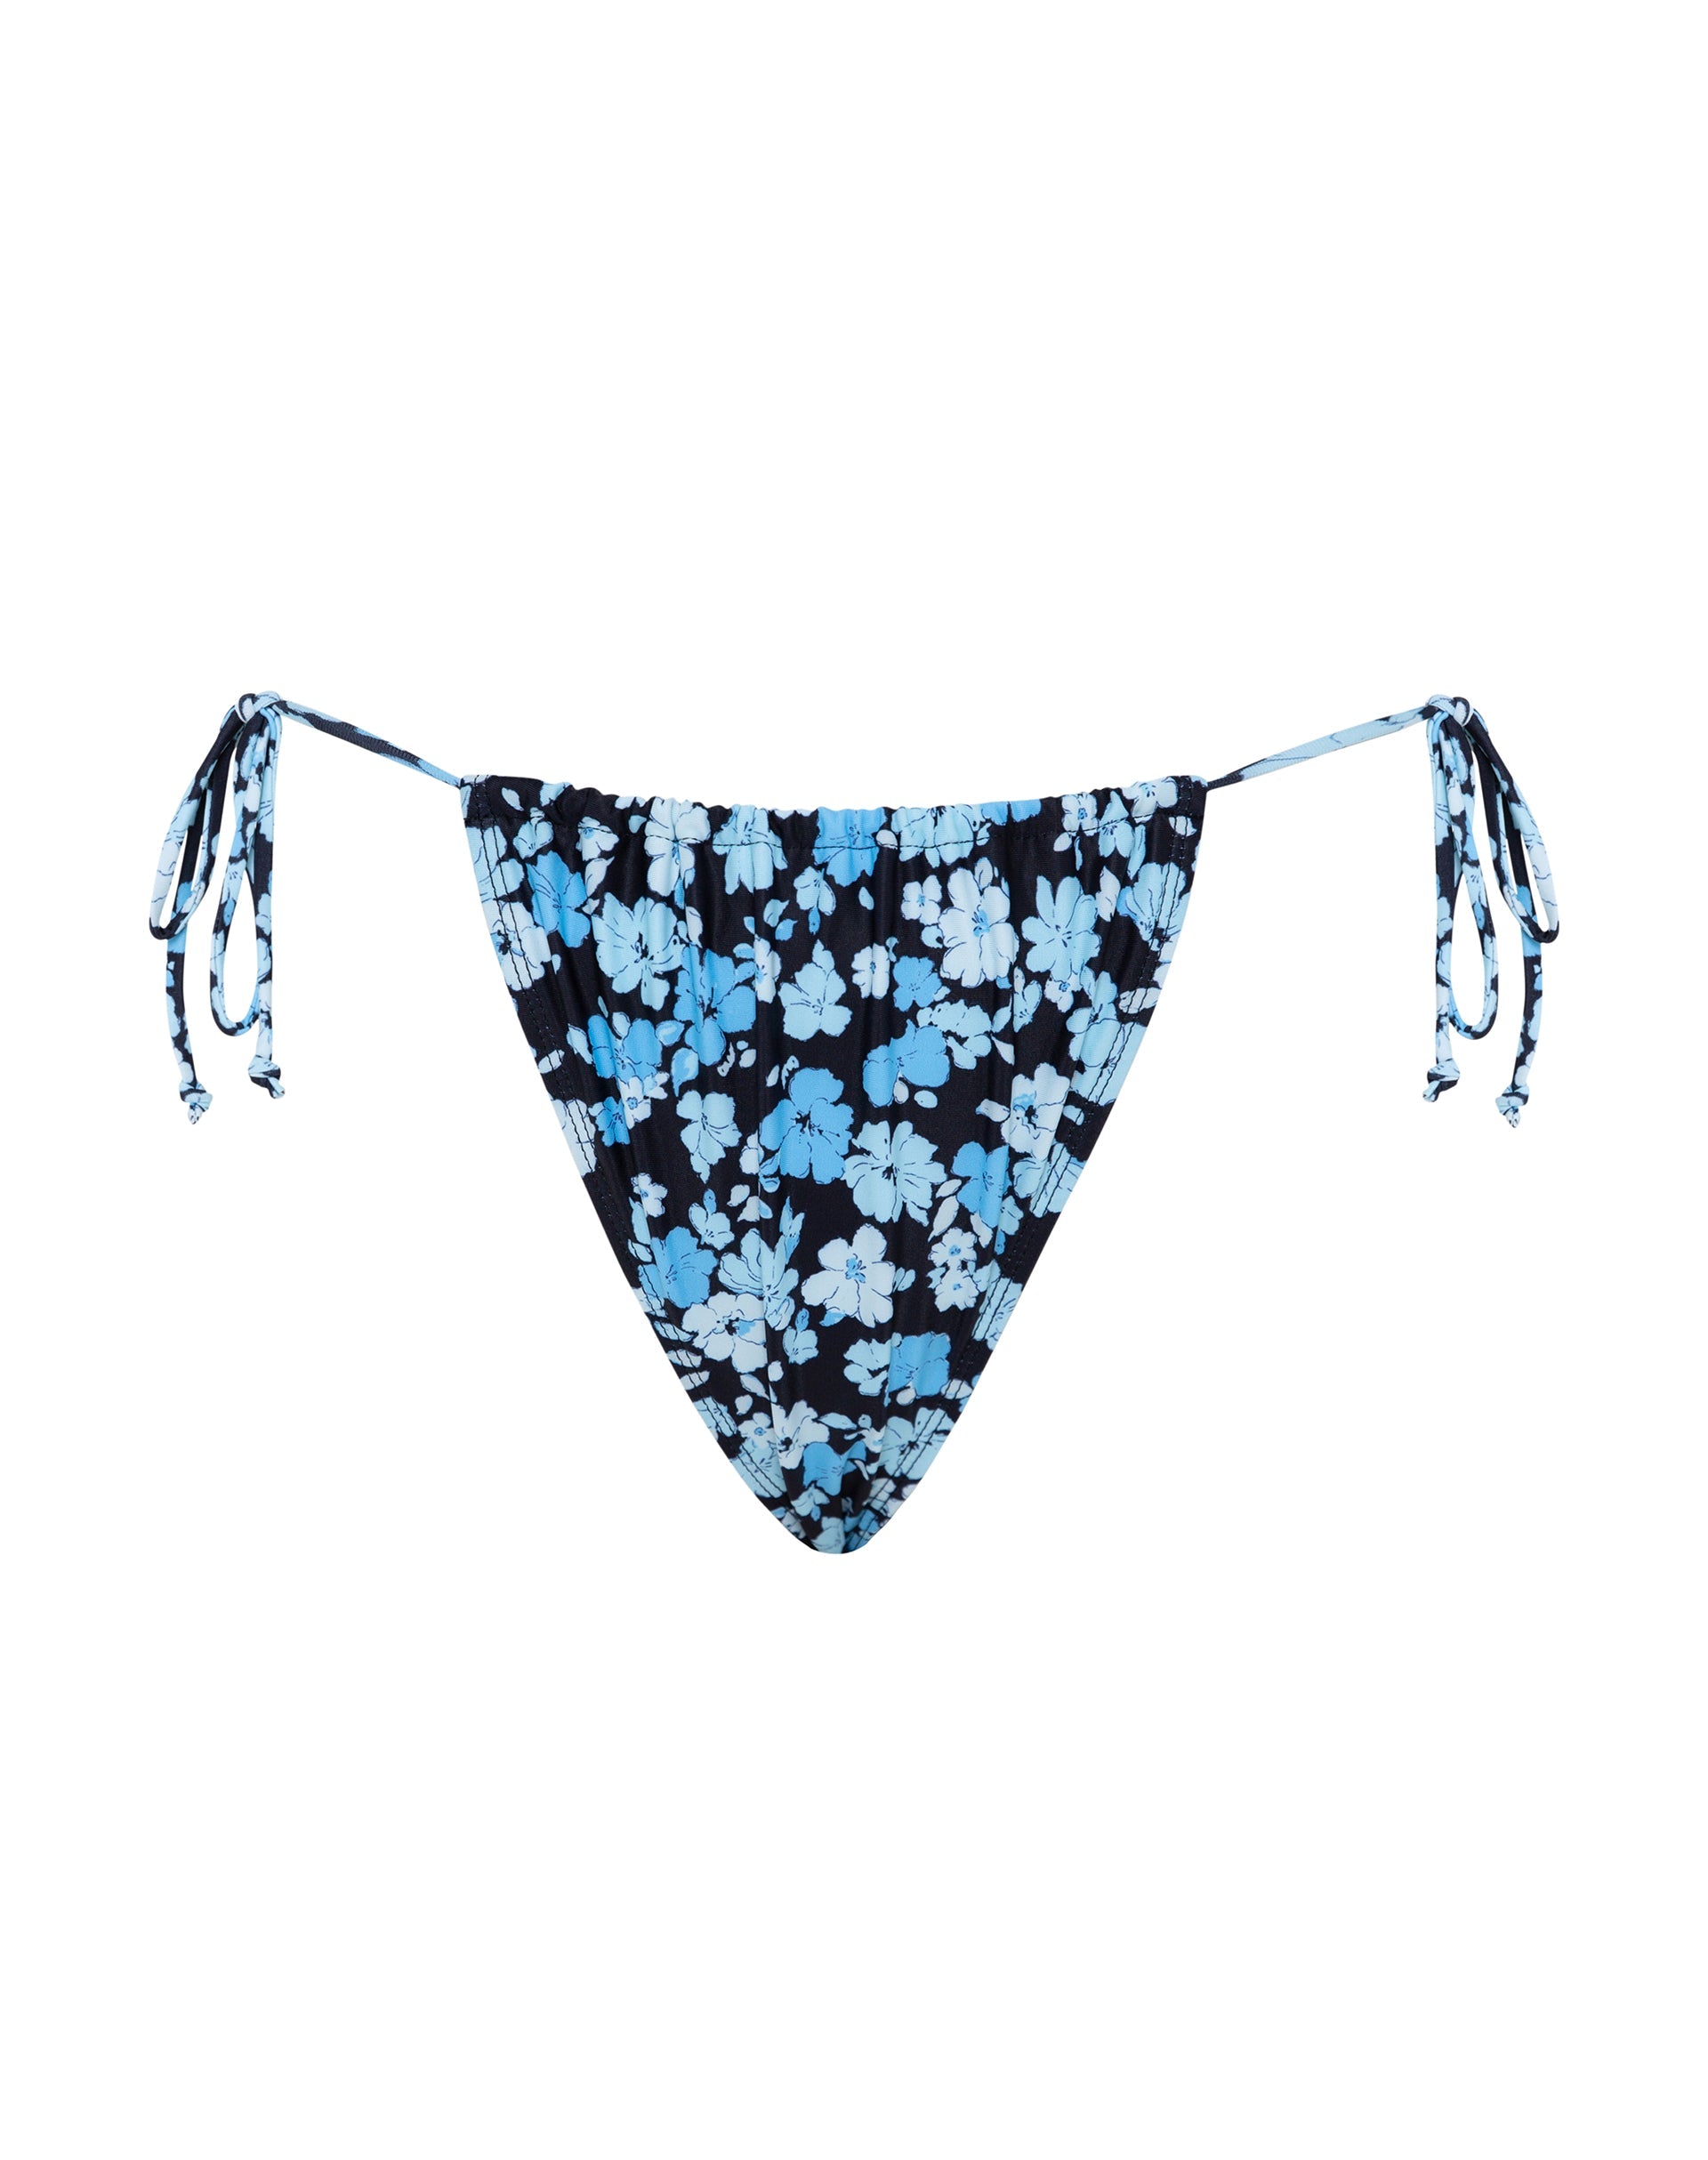 Imagen de la braguita de bikini Leyna en azul pastel floral